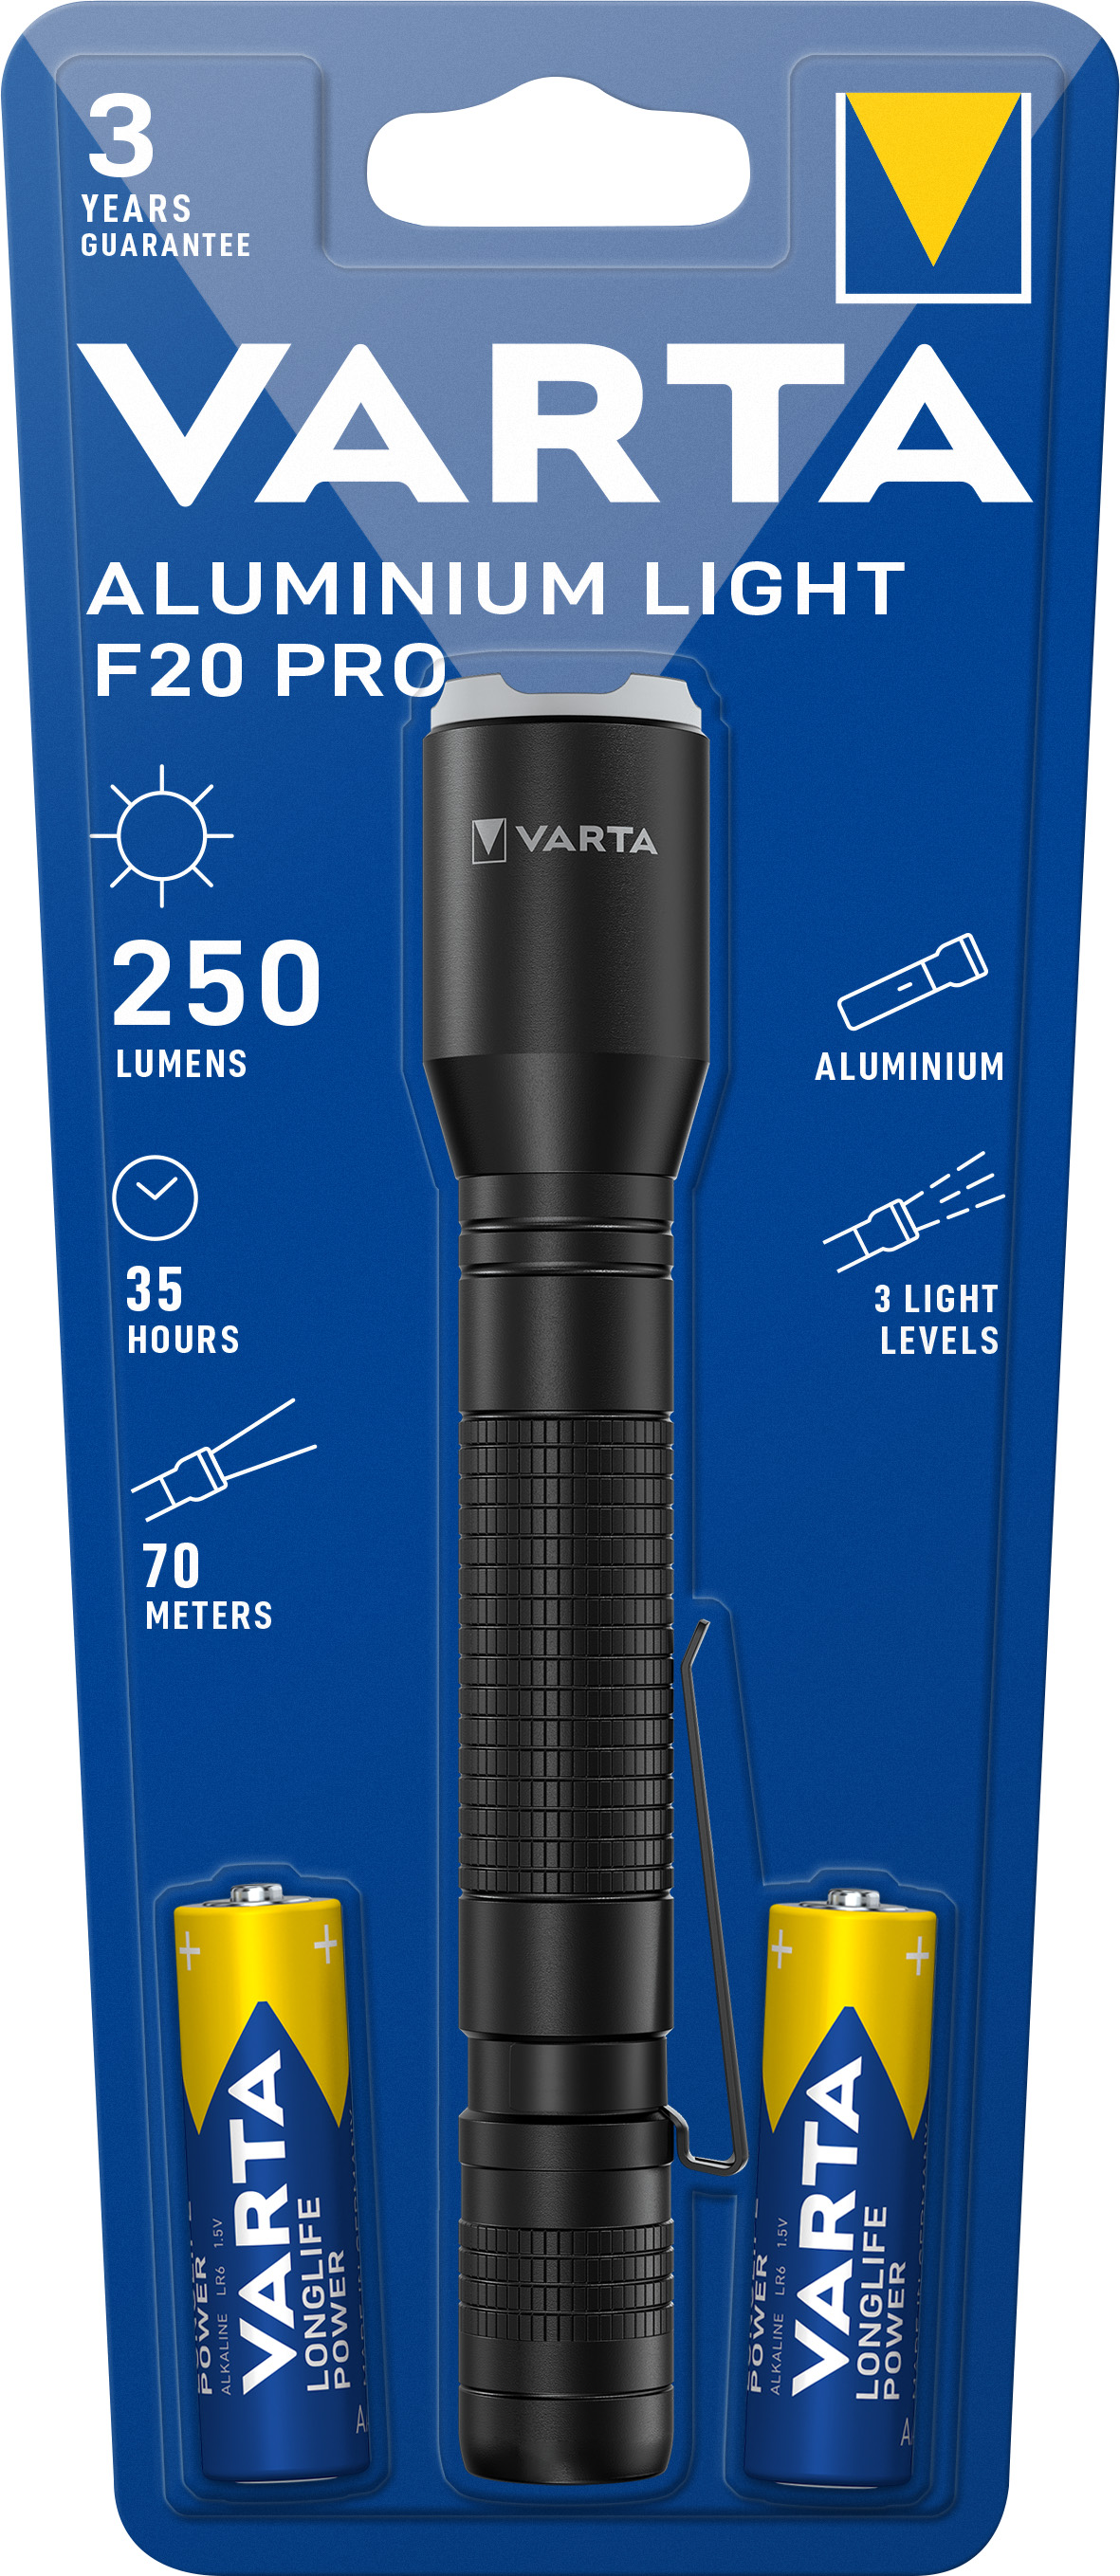 Varta LED Taschenlampe Aluminium Light 250lm, inkl. 2x Alkaline AA, Retail Blister